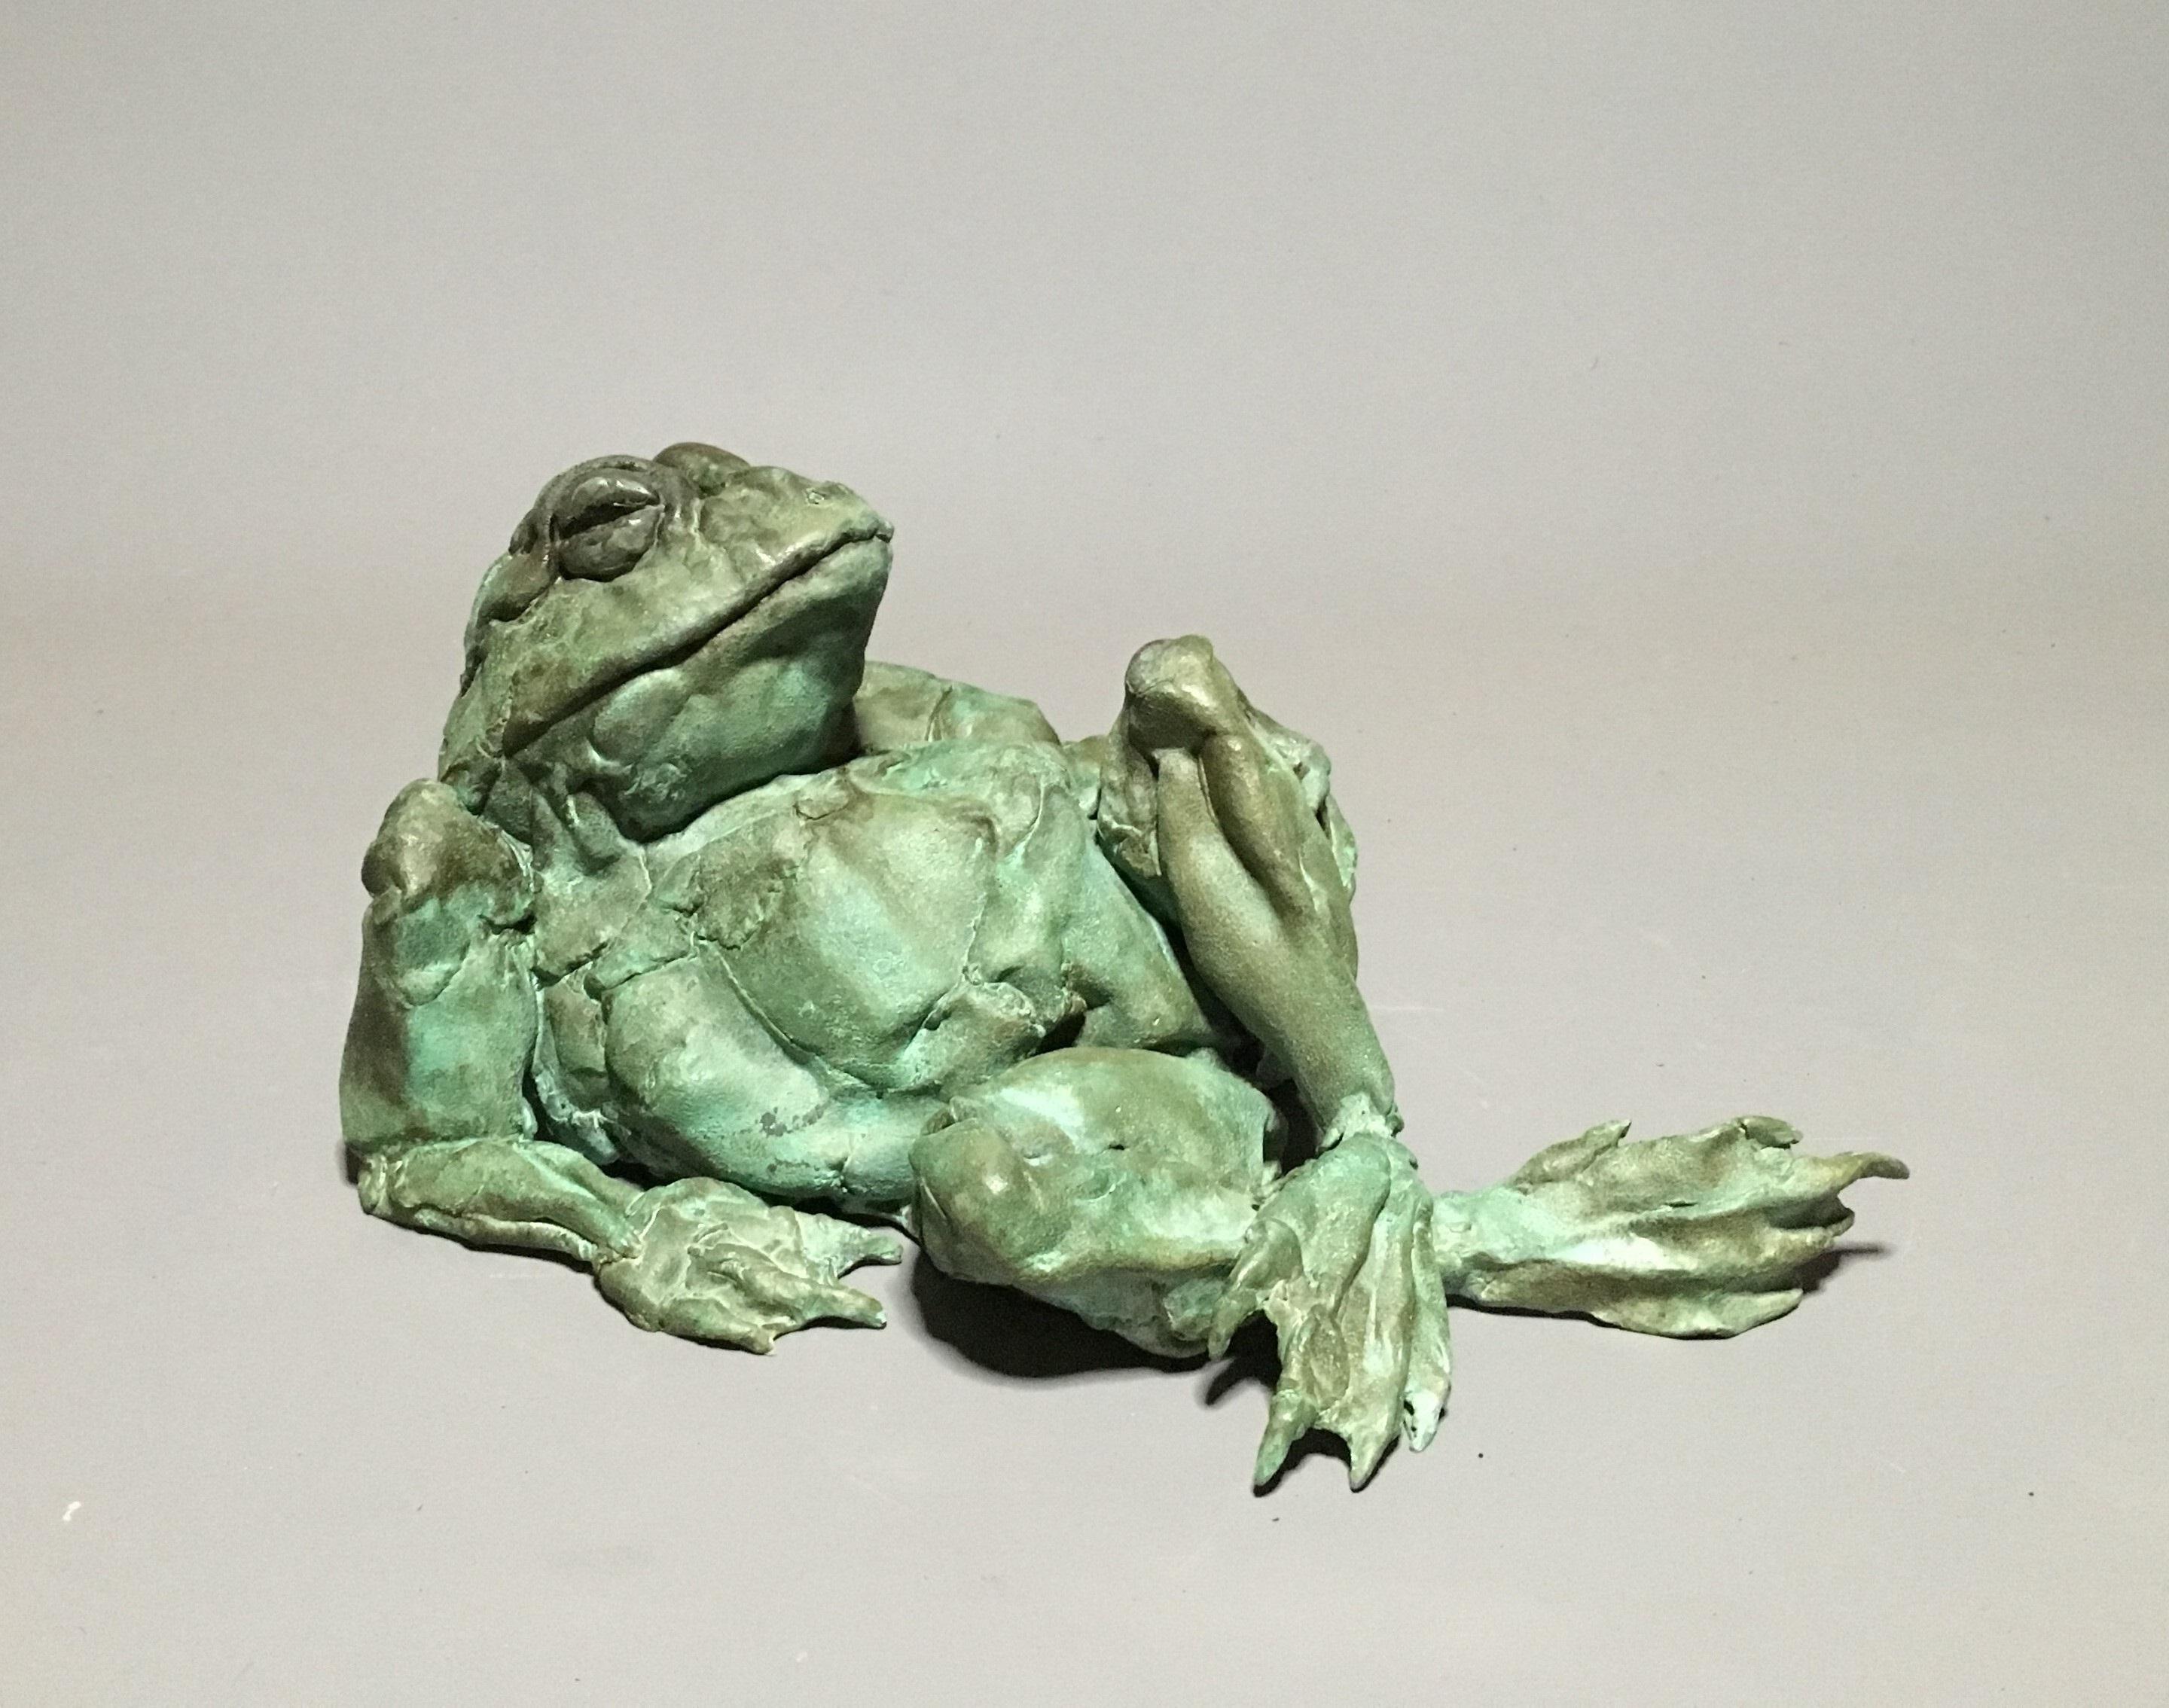 Details about   Miniature Bronze Figurine frog 2 toad sculpture art manual processing rare 